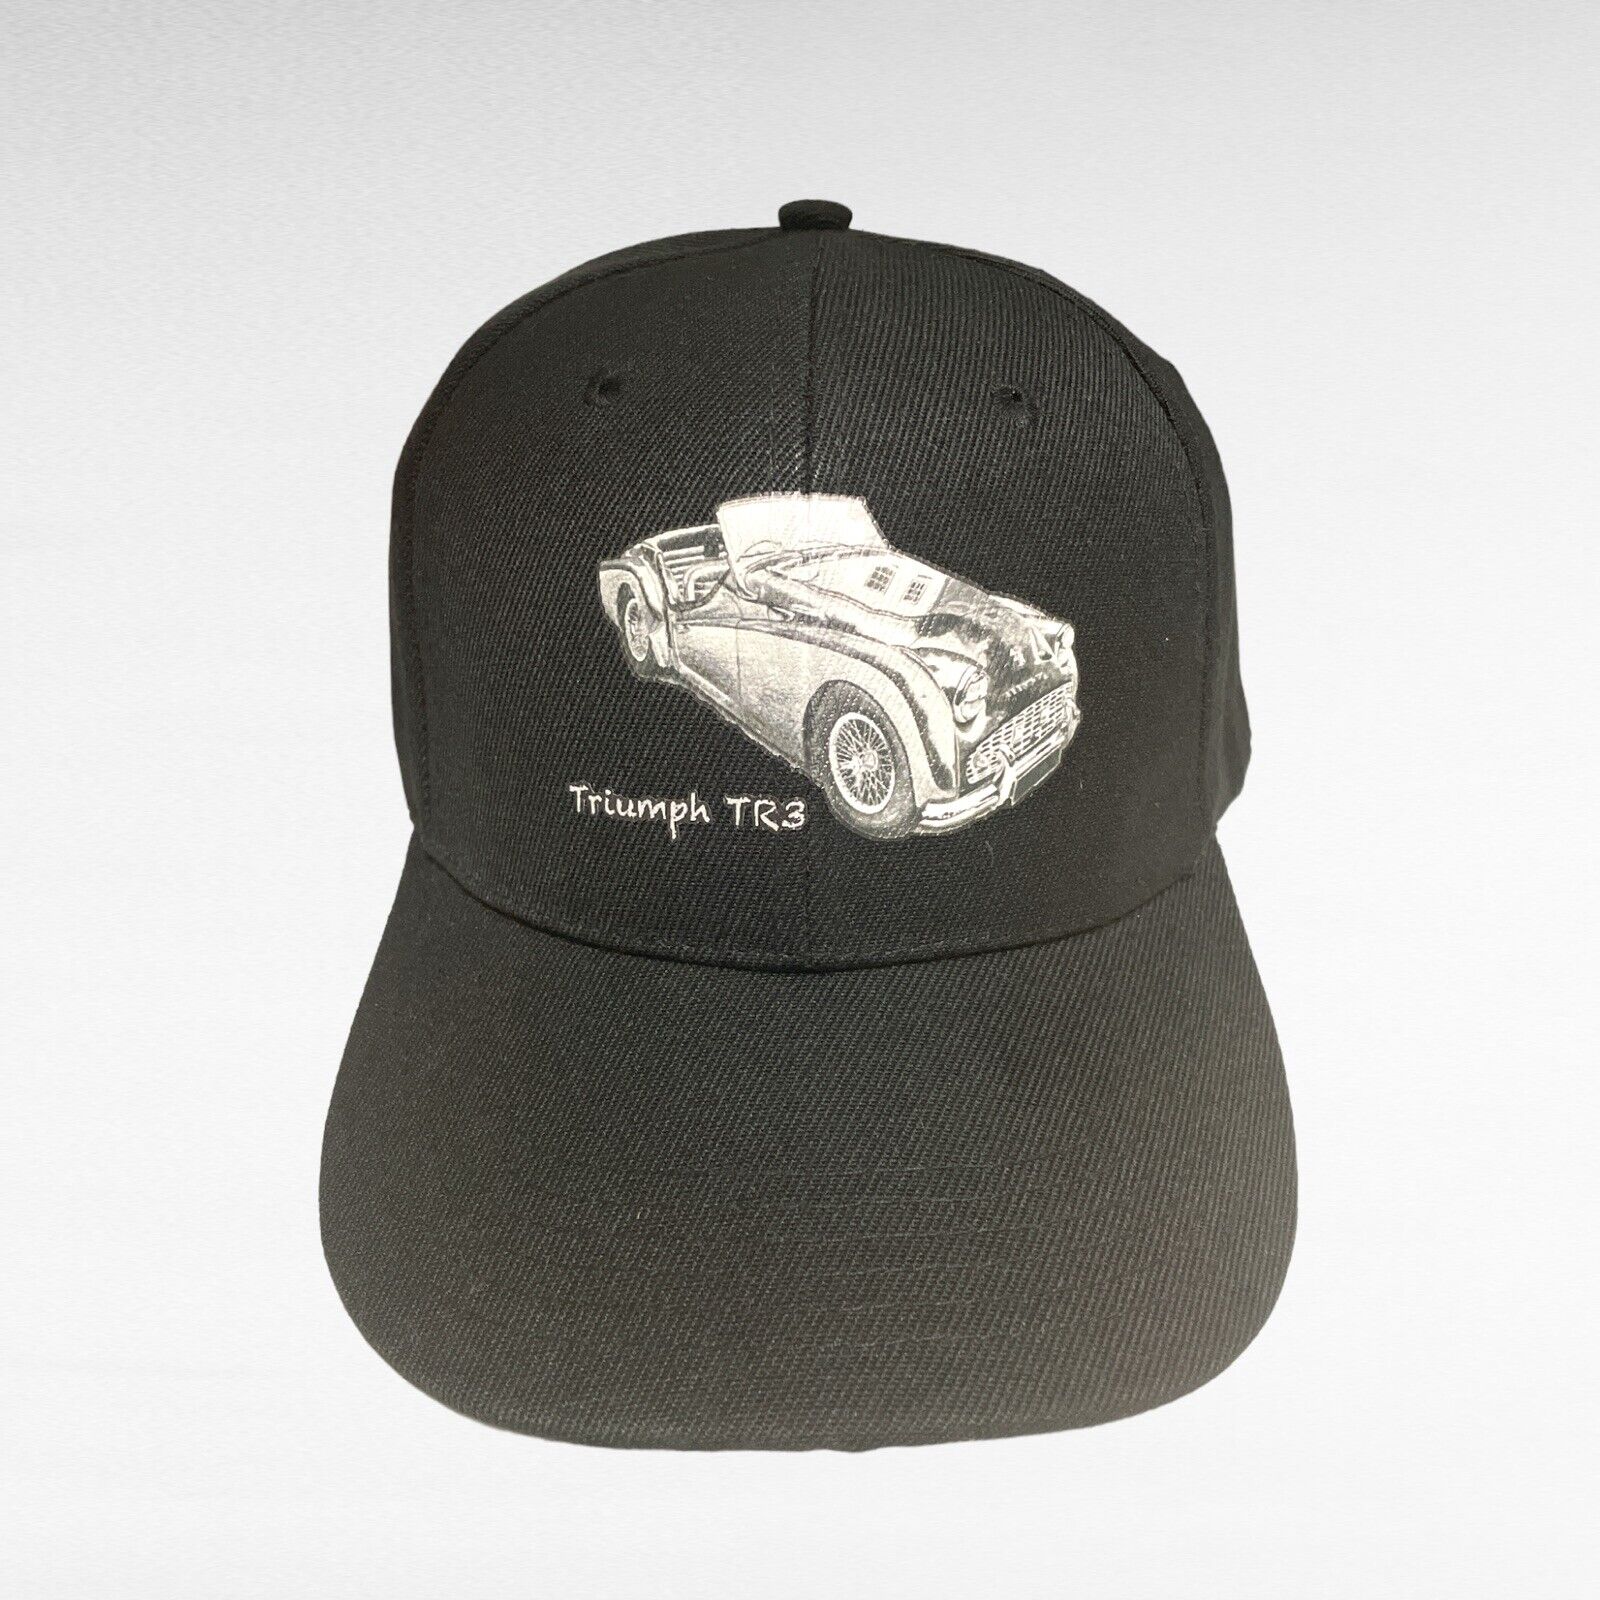 Triumph TR3 Printed Baseball Cap, Hat Strap Back, Classic Car Enthusiast Gift